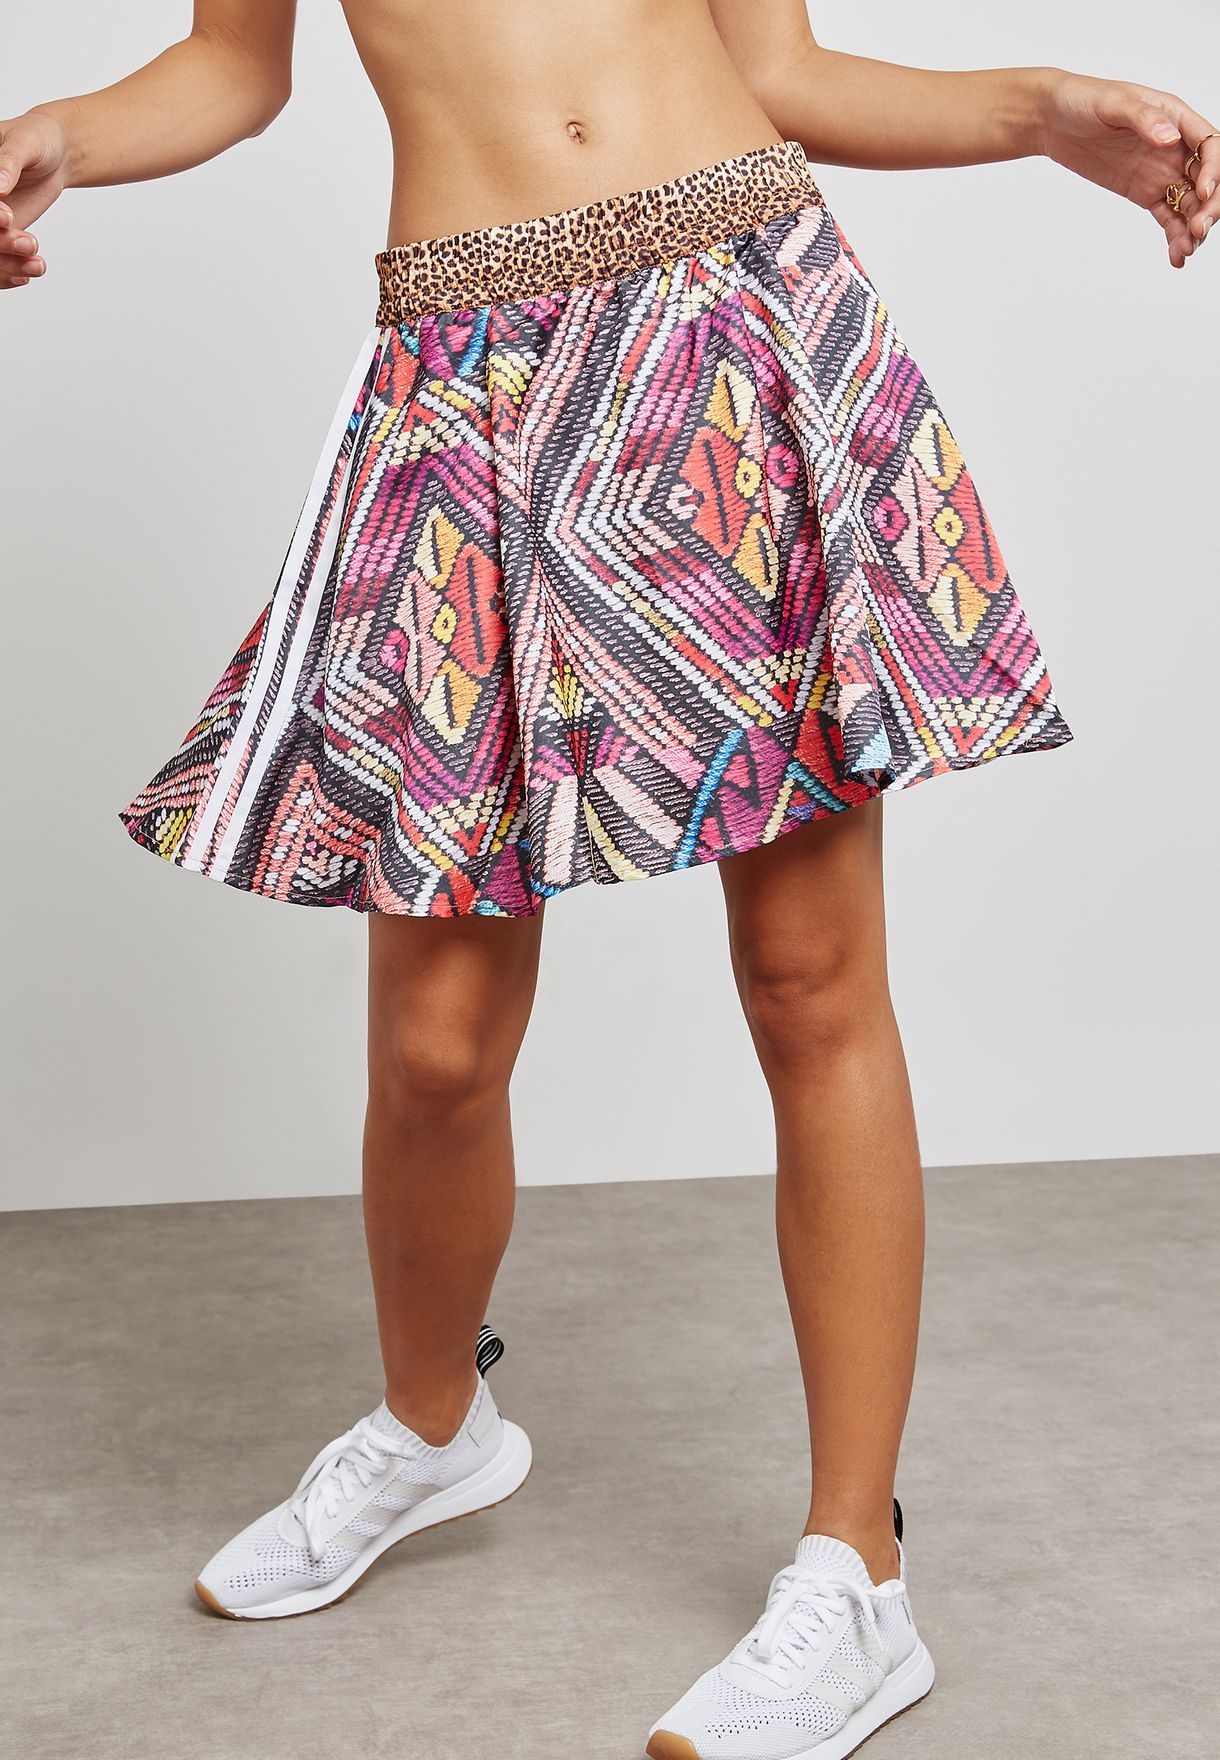 Buy adidas Originals prints FARM Skirts 